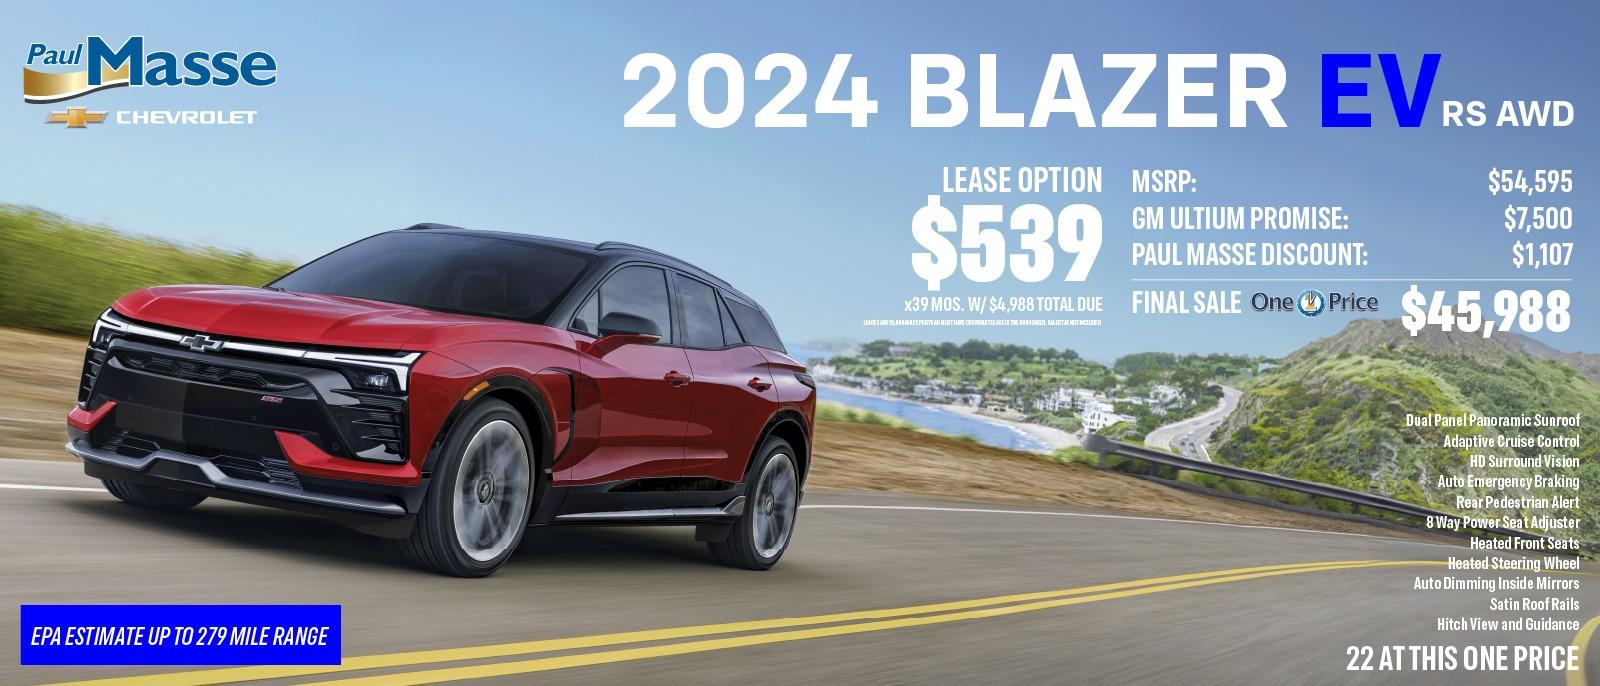 2024 blazer EV lease option